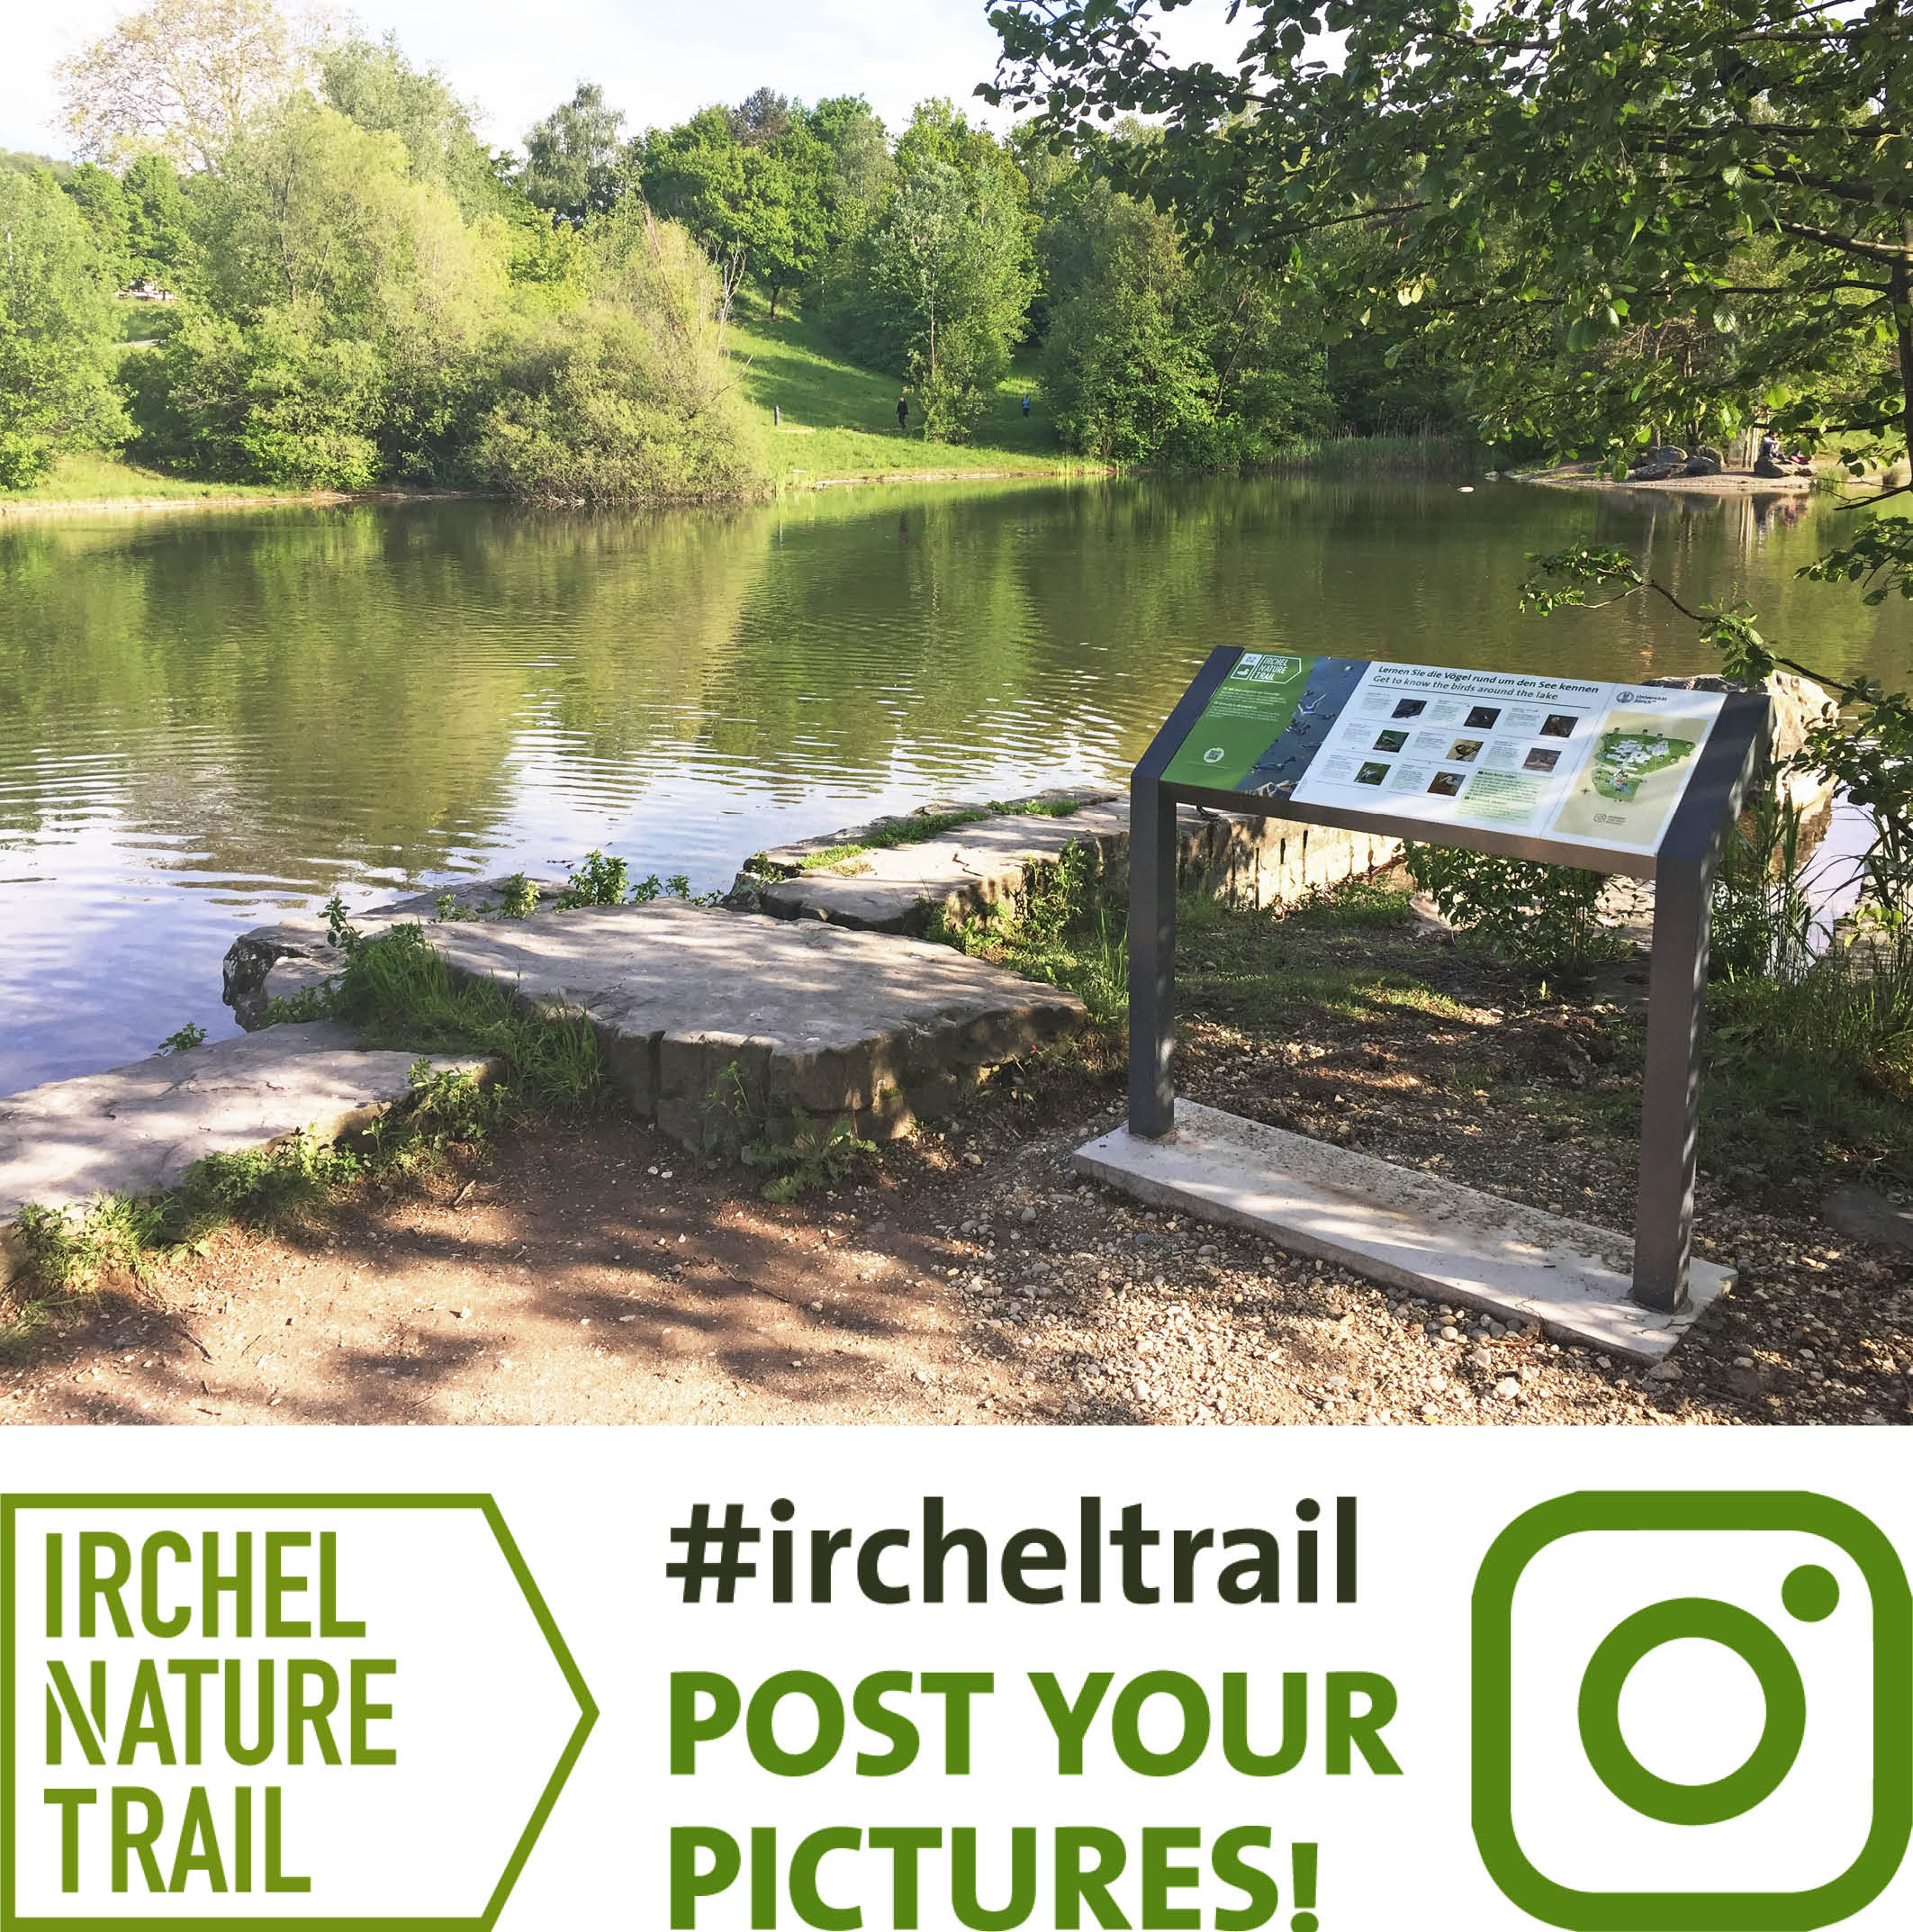 Irchel Nature Trail